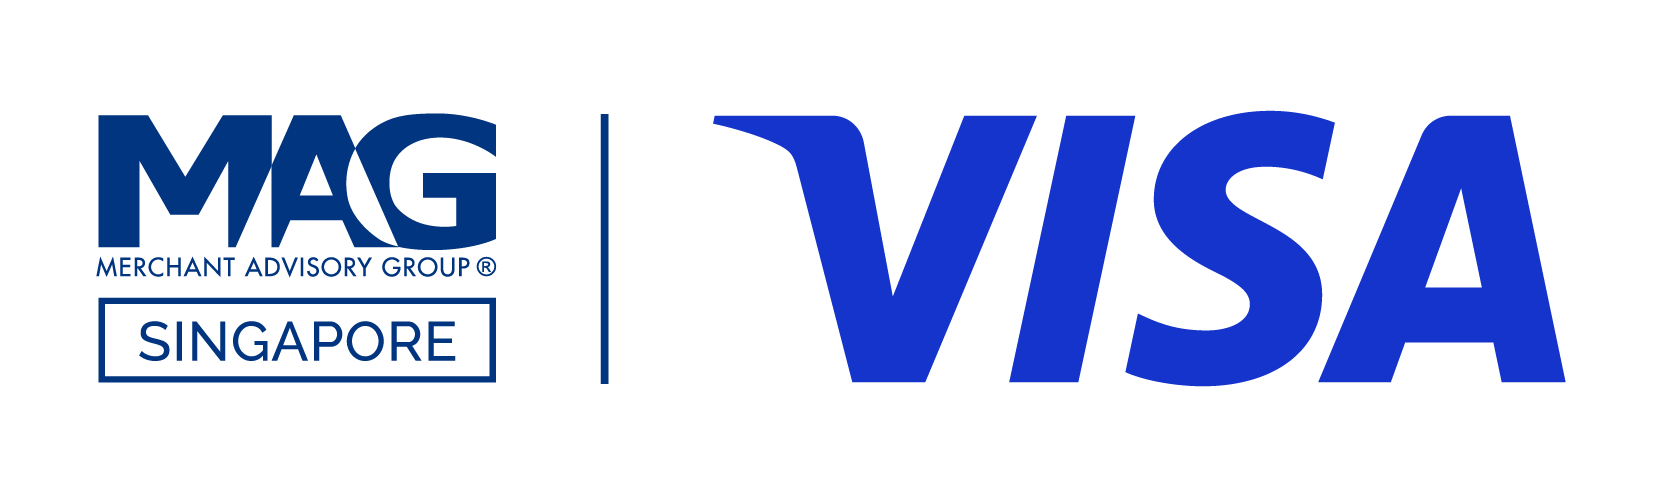 MAG VISA Meetup Logo